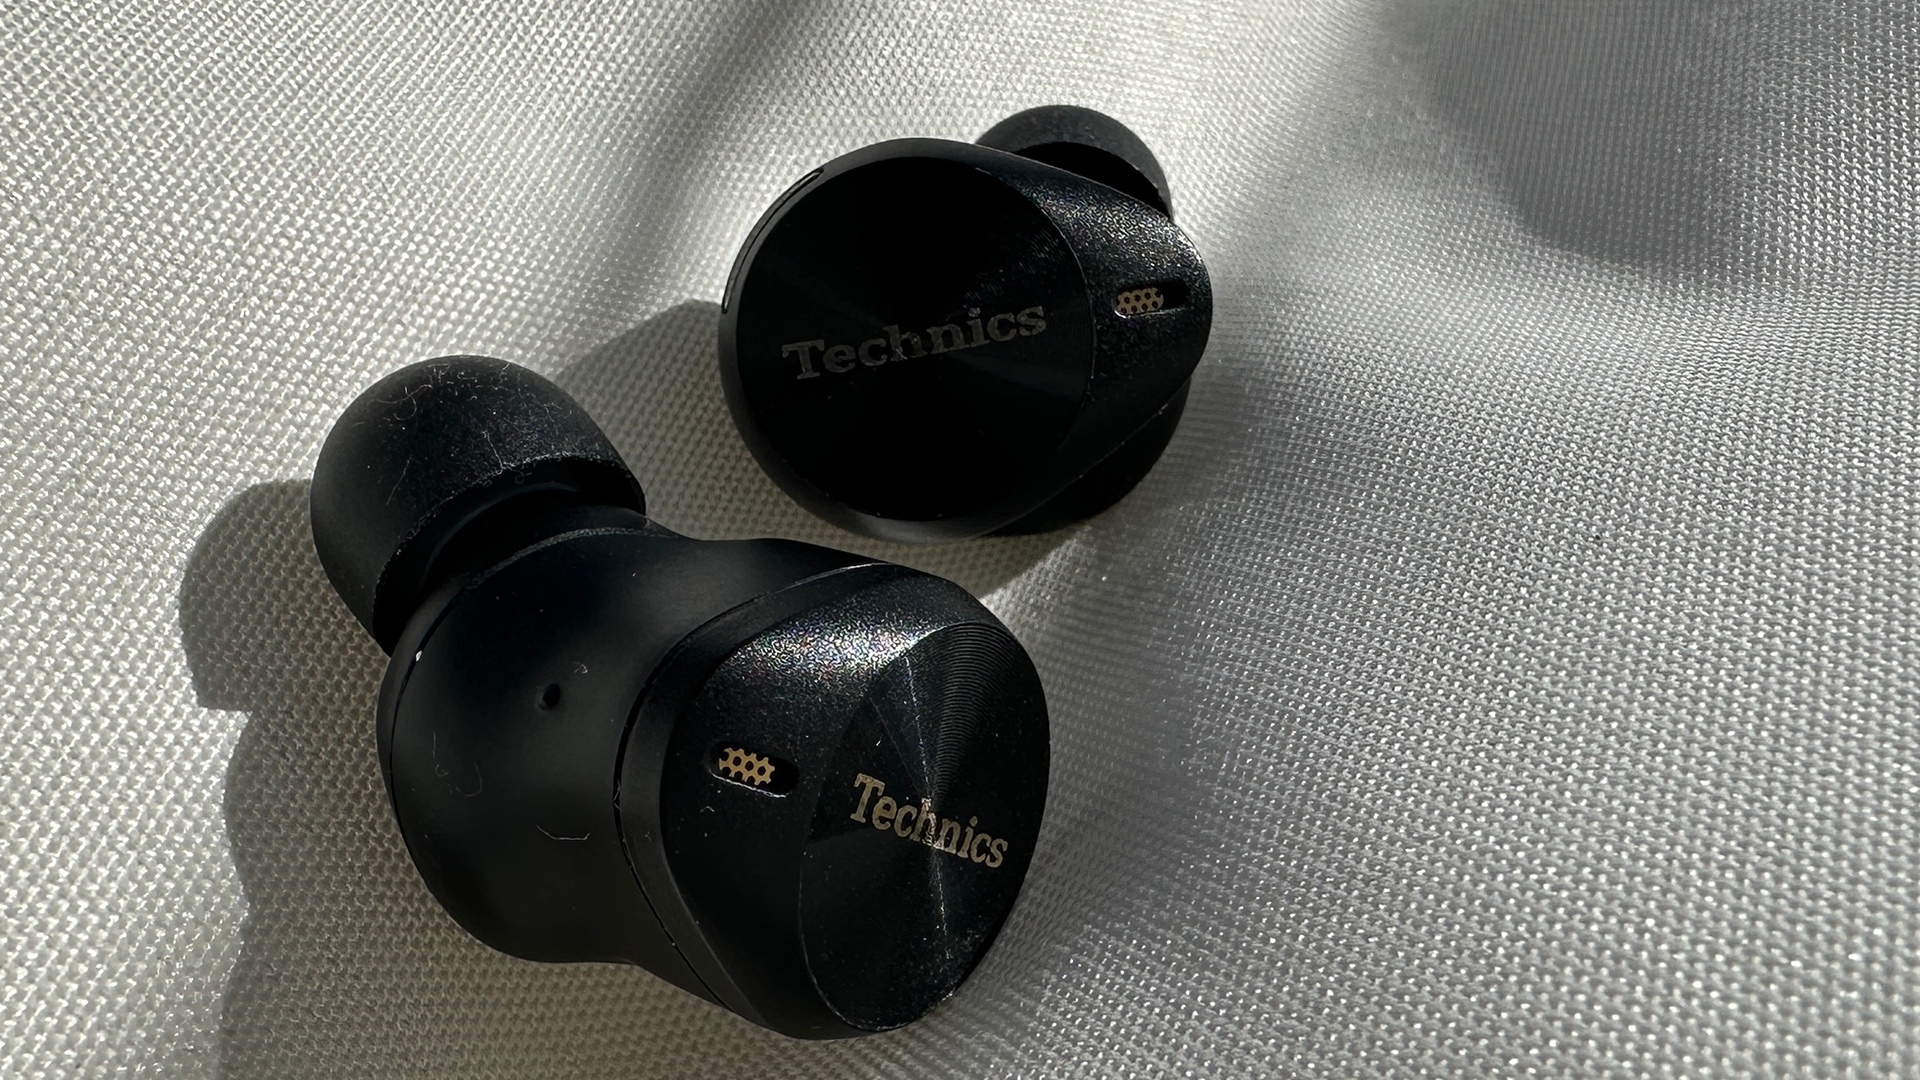 The Technics EAH-AZ80 earbuds outside their case